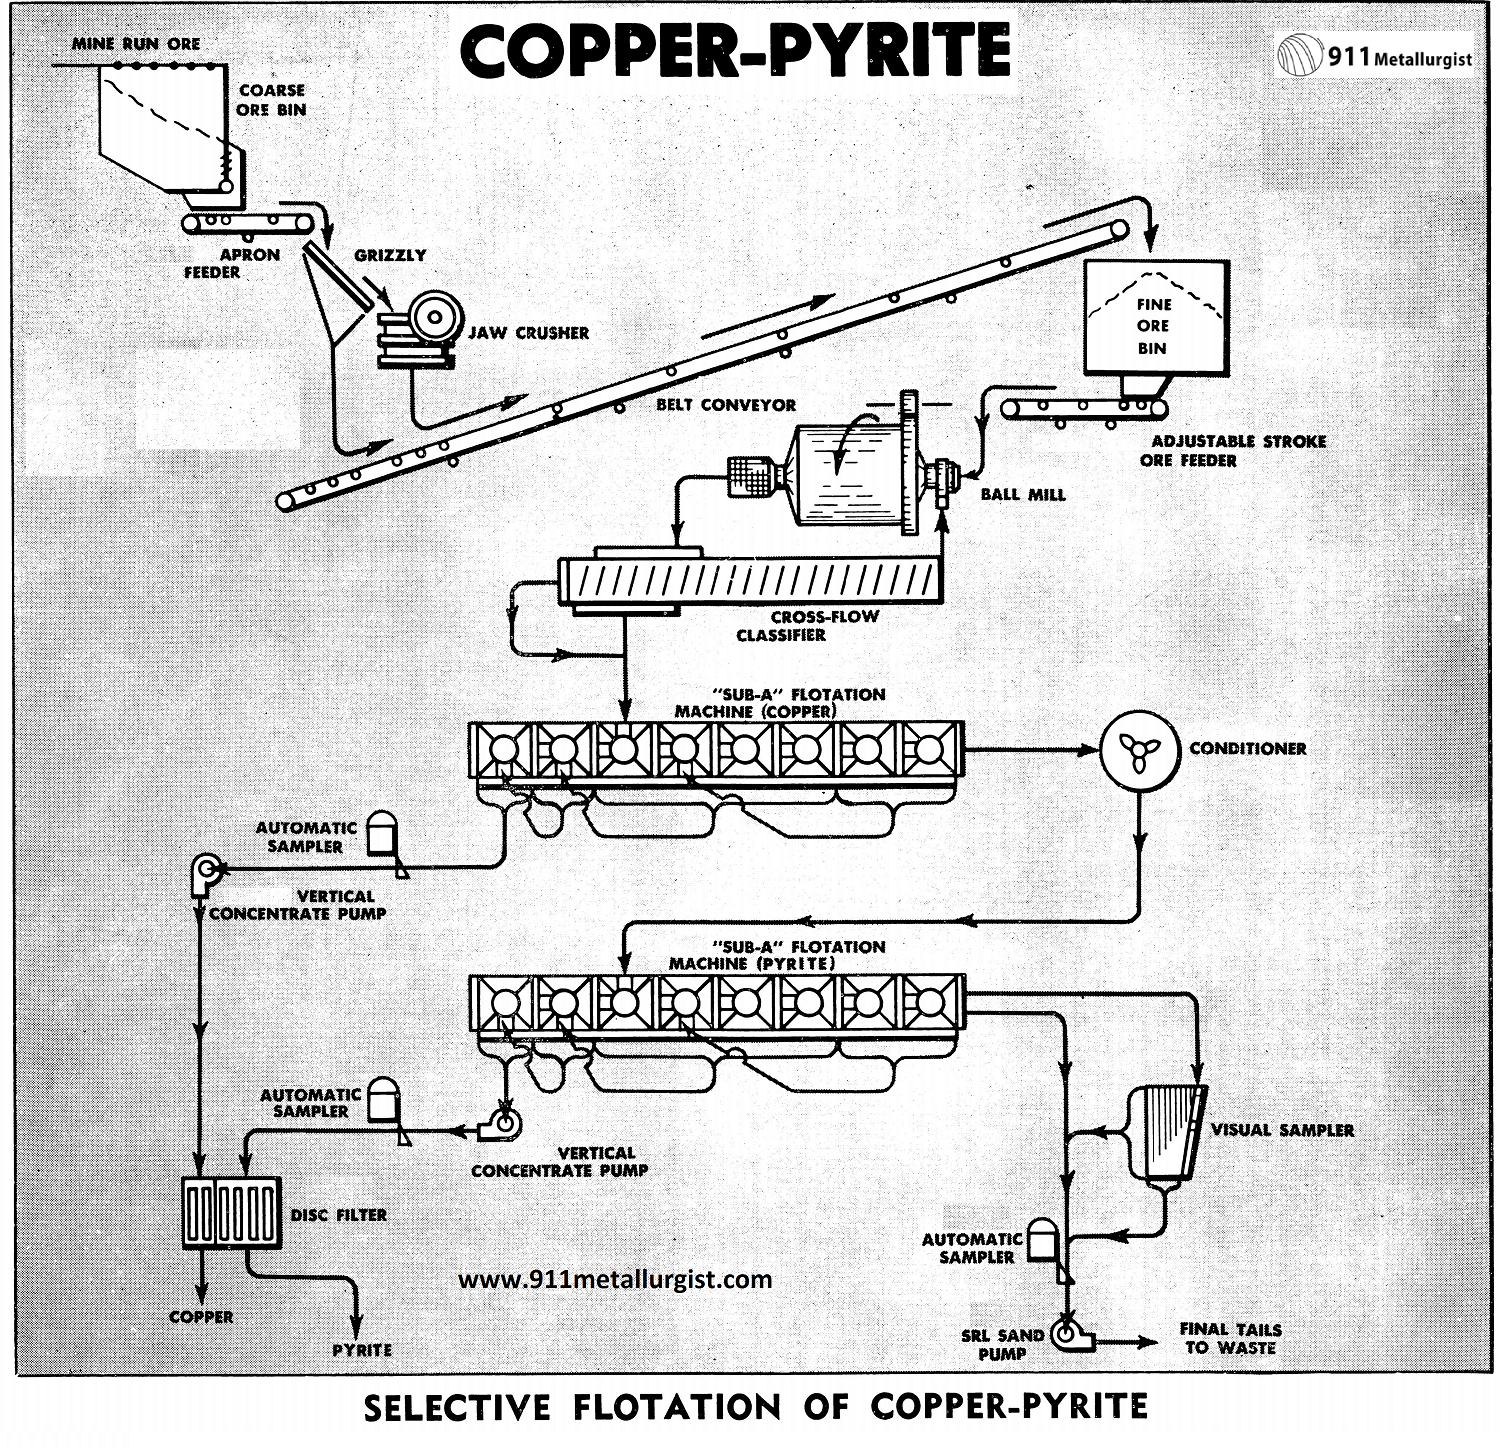 Selective Flotation of Copper-Pyrite